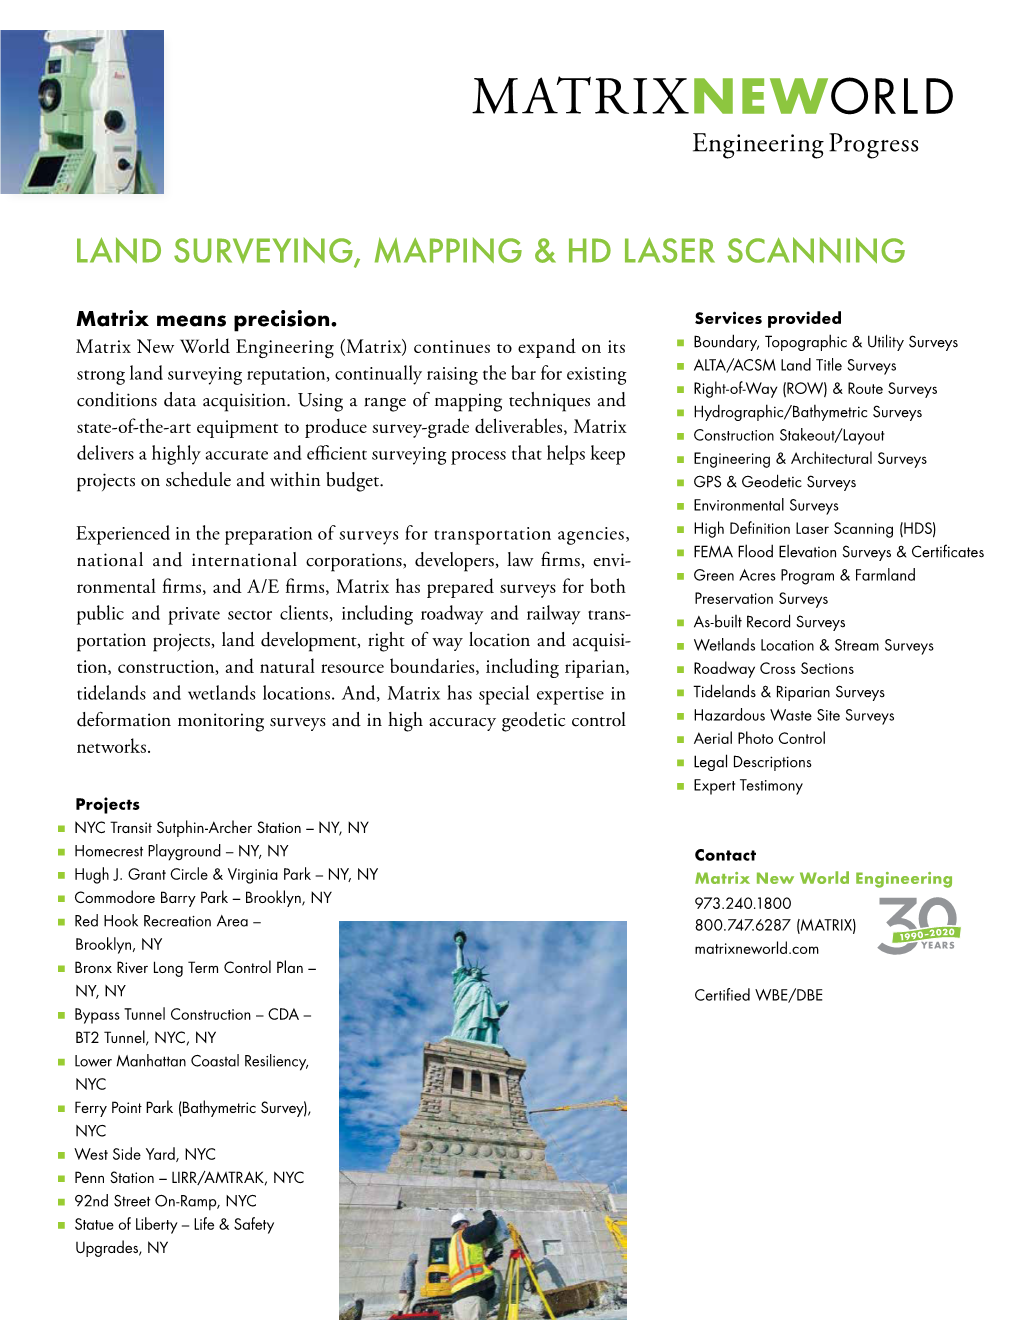 Land Surveying, Mapping & Hd Laser